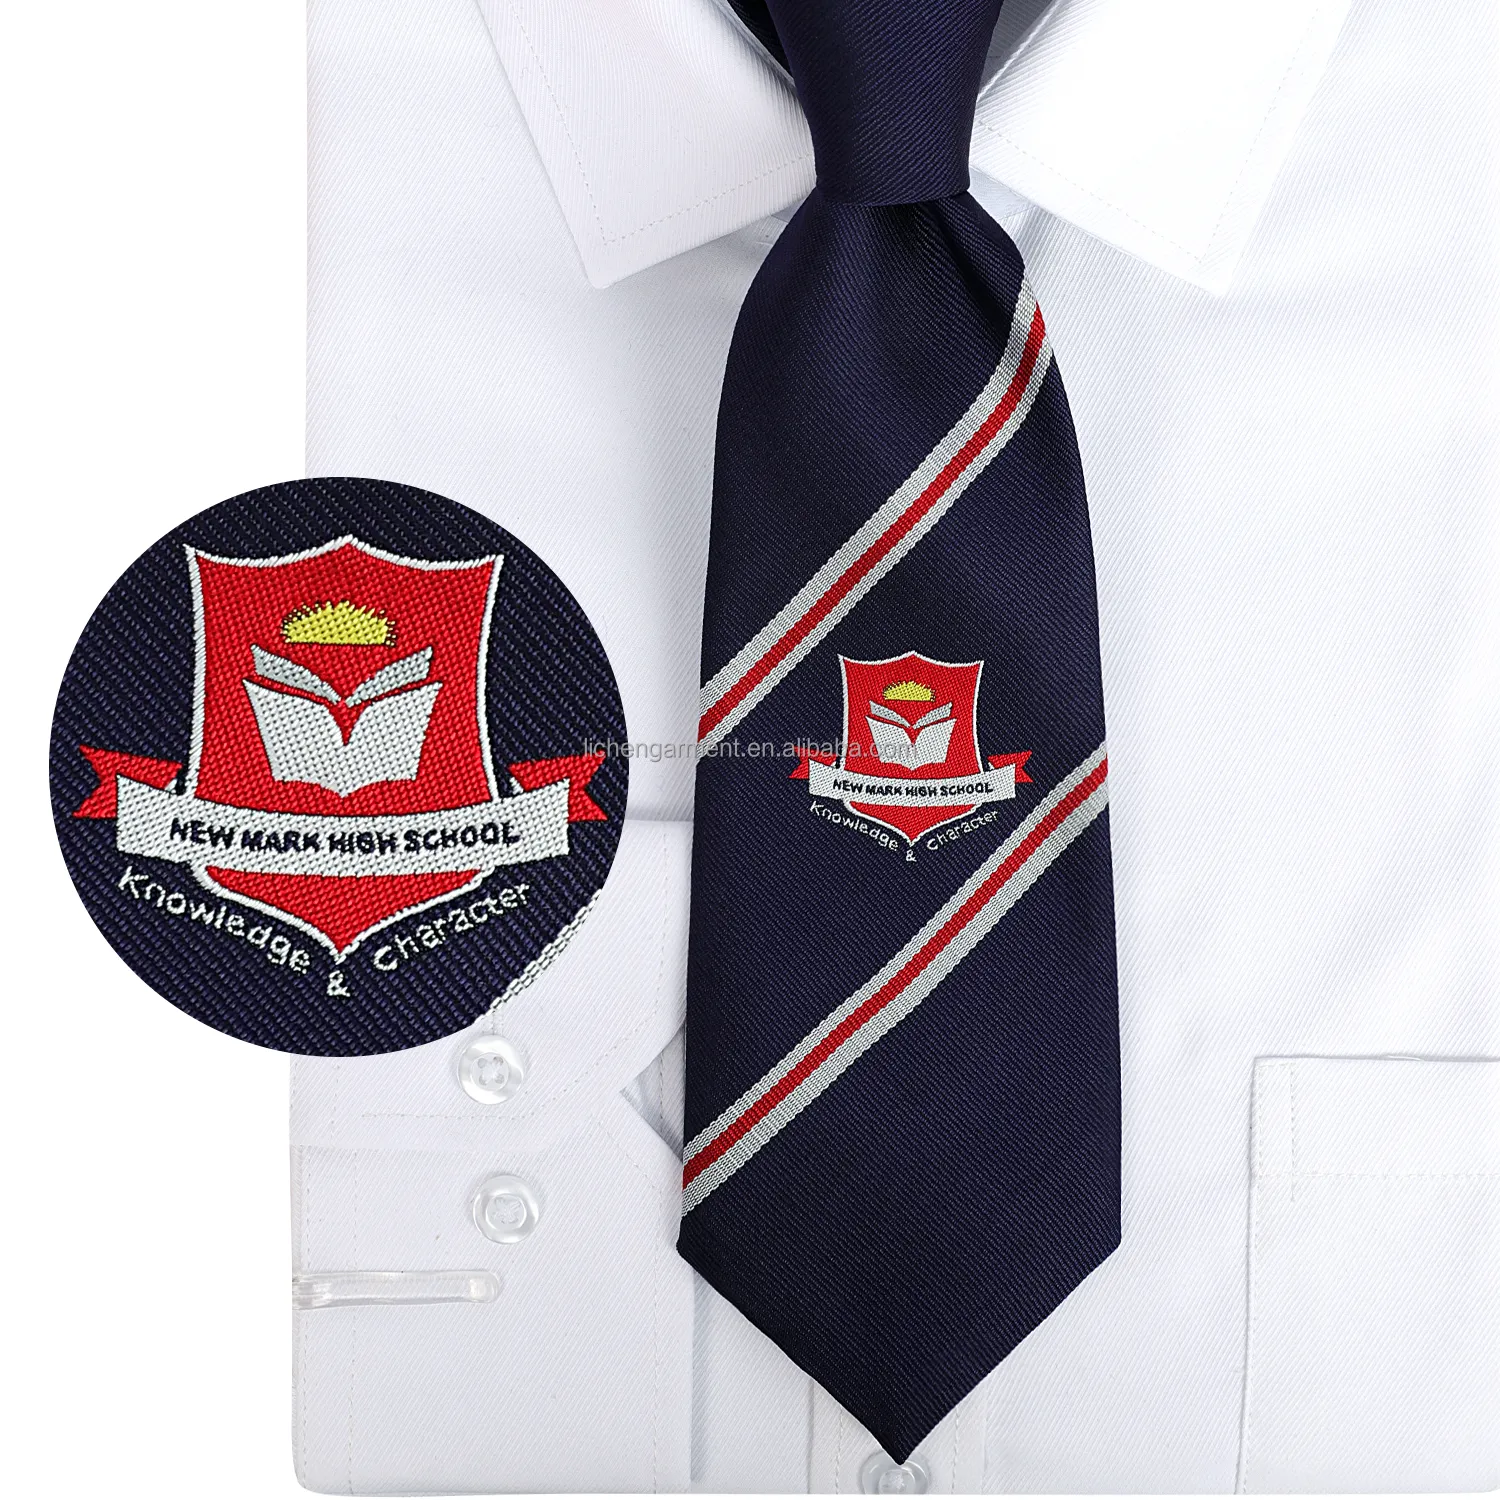 OEM Polyester Jacquard Woven School Neck Tie With School Logo Kids Neck Tie